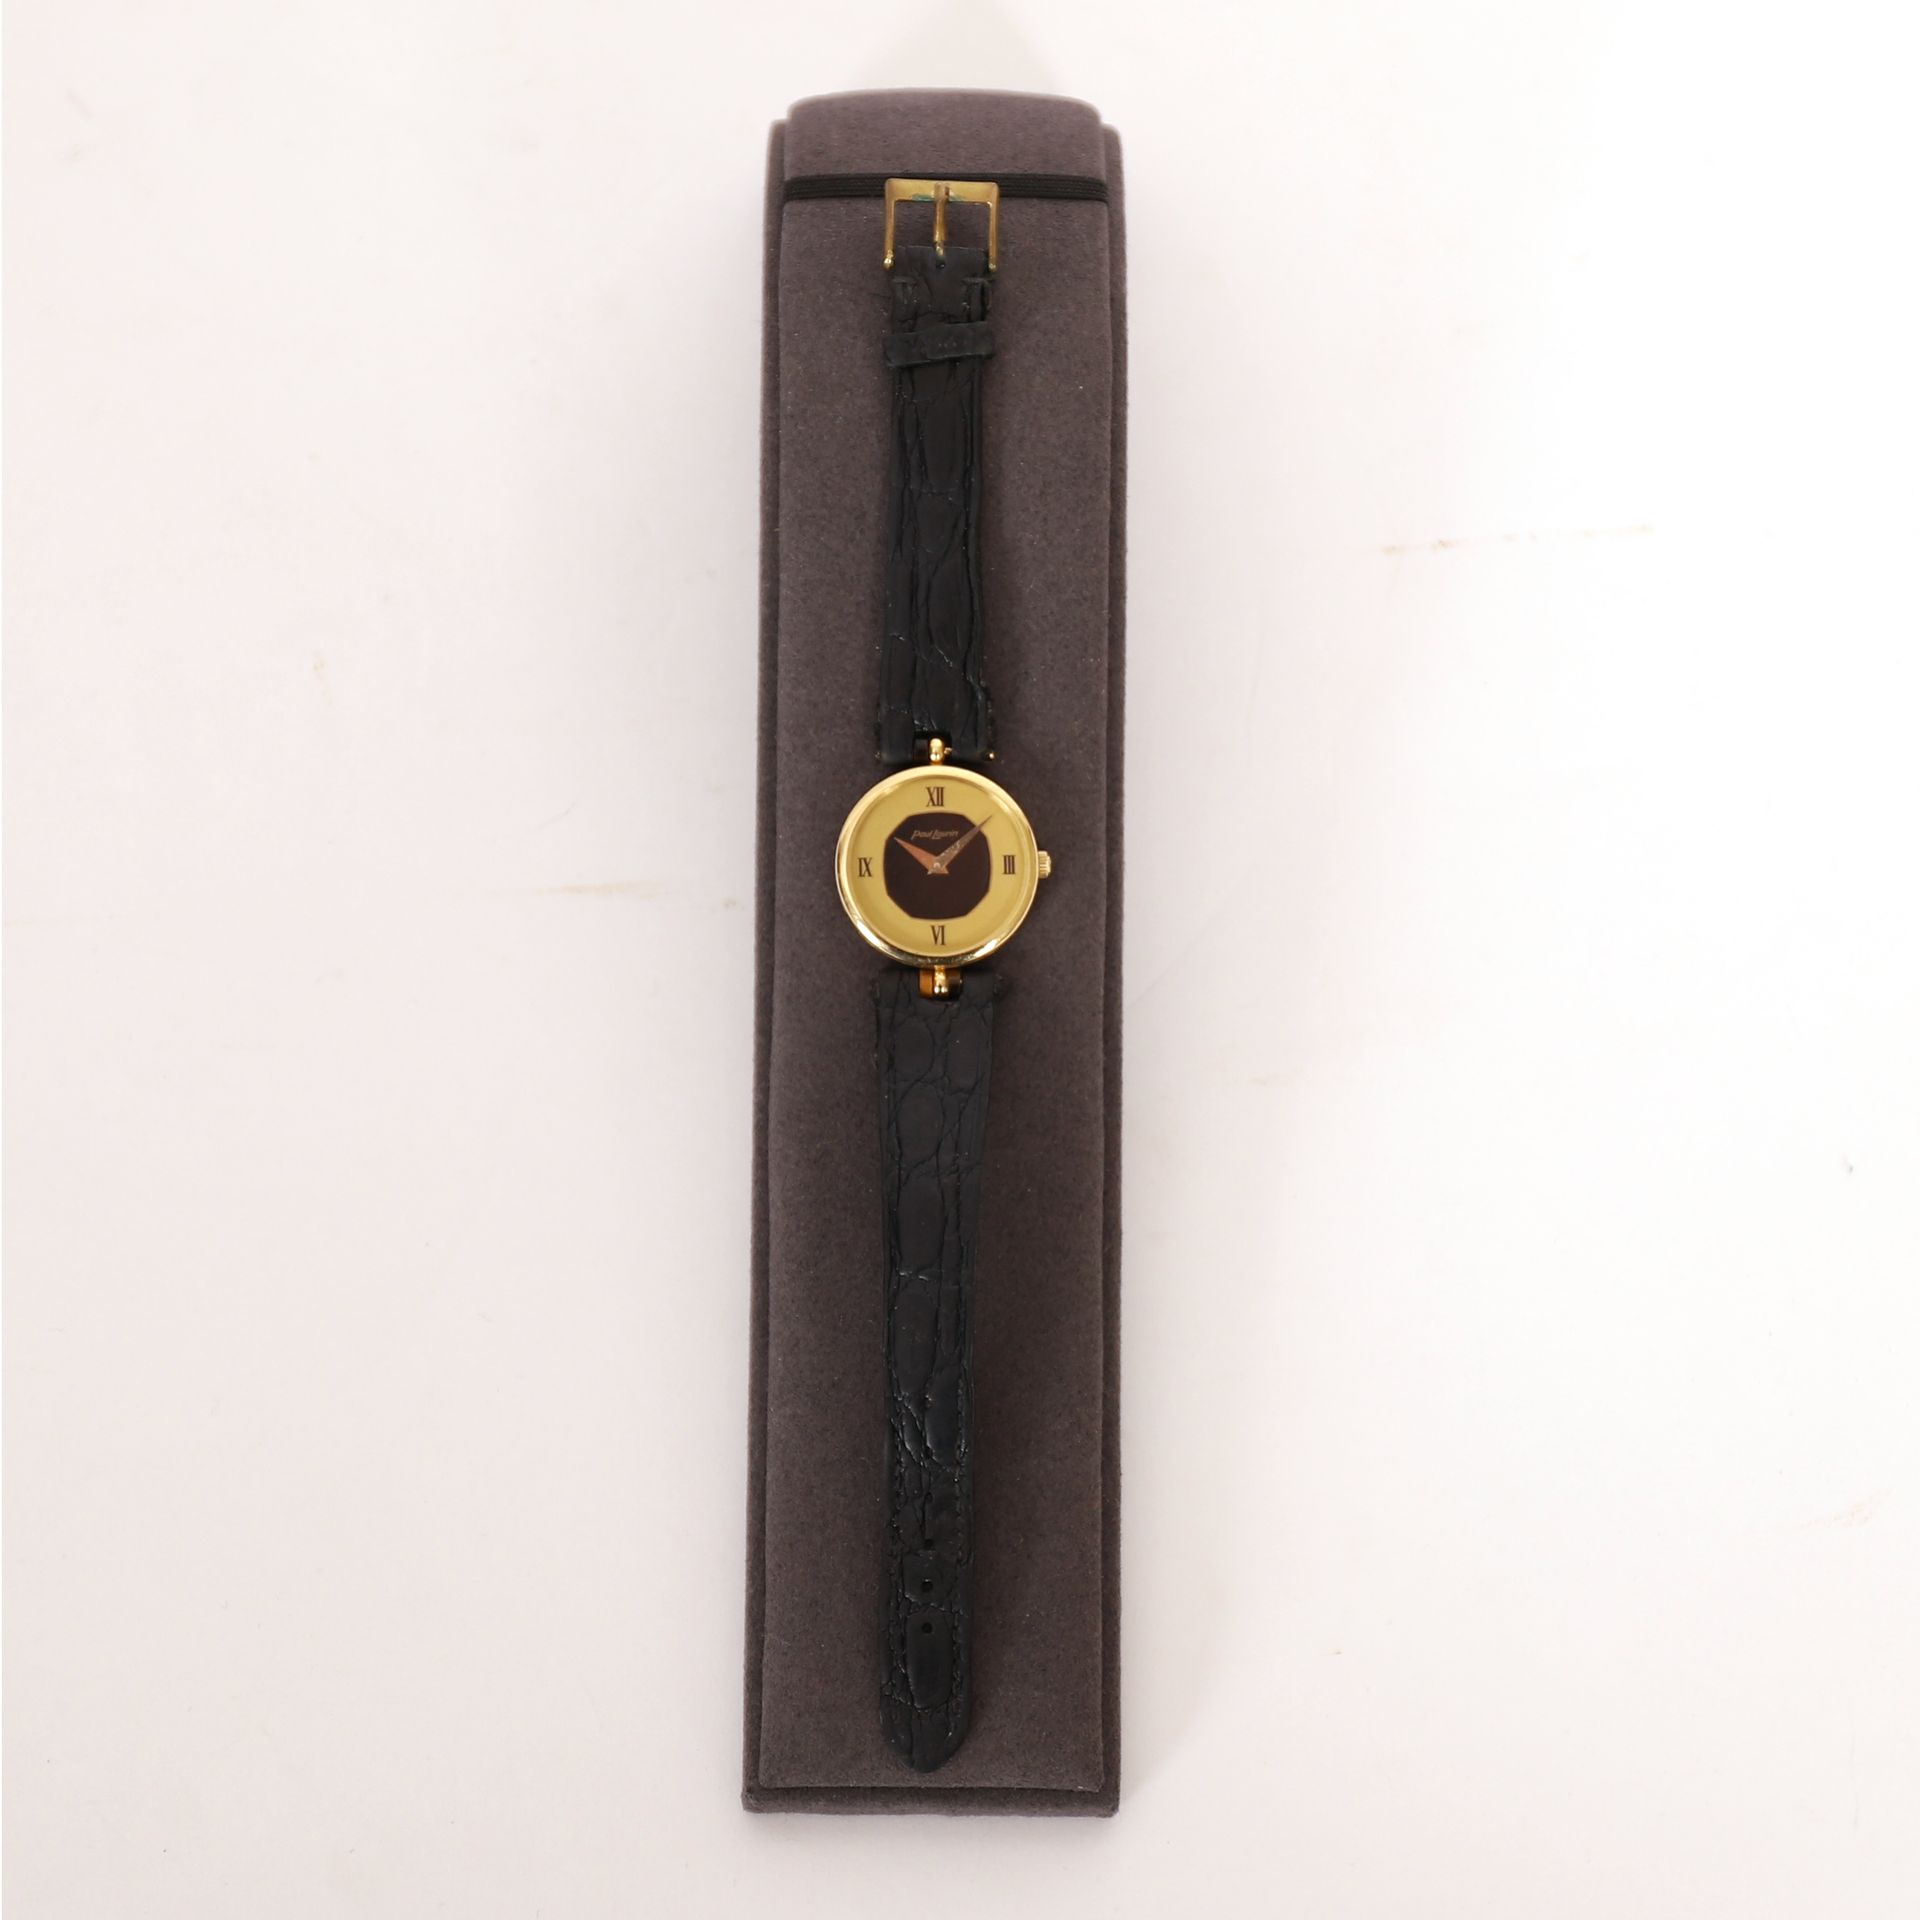 Null GOLDFARBENE UHR PAUL LAURIN

Armband aus schwarzem Leder

Pb: 22 grs